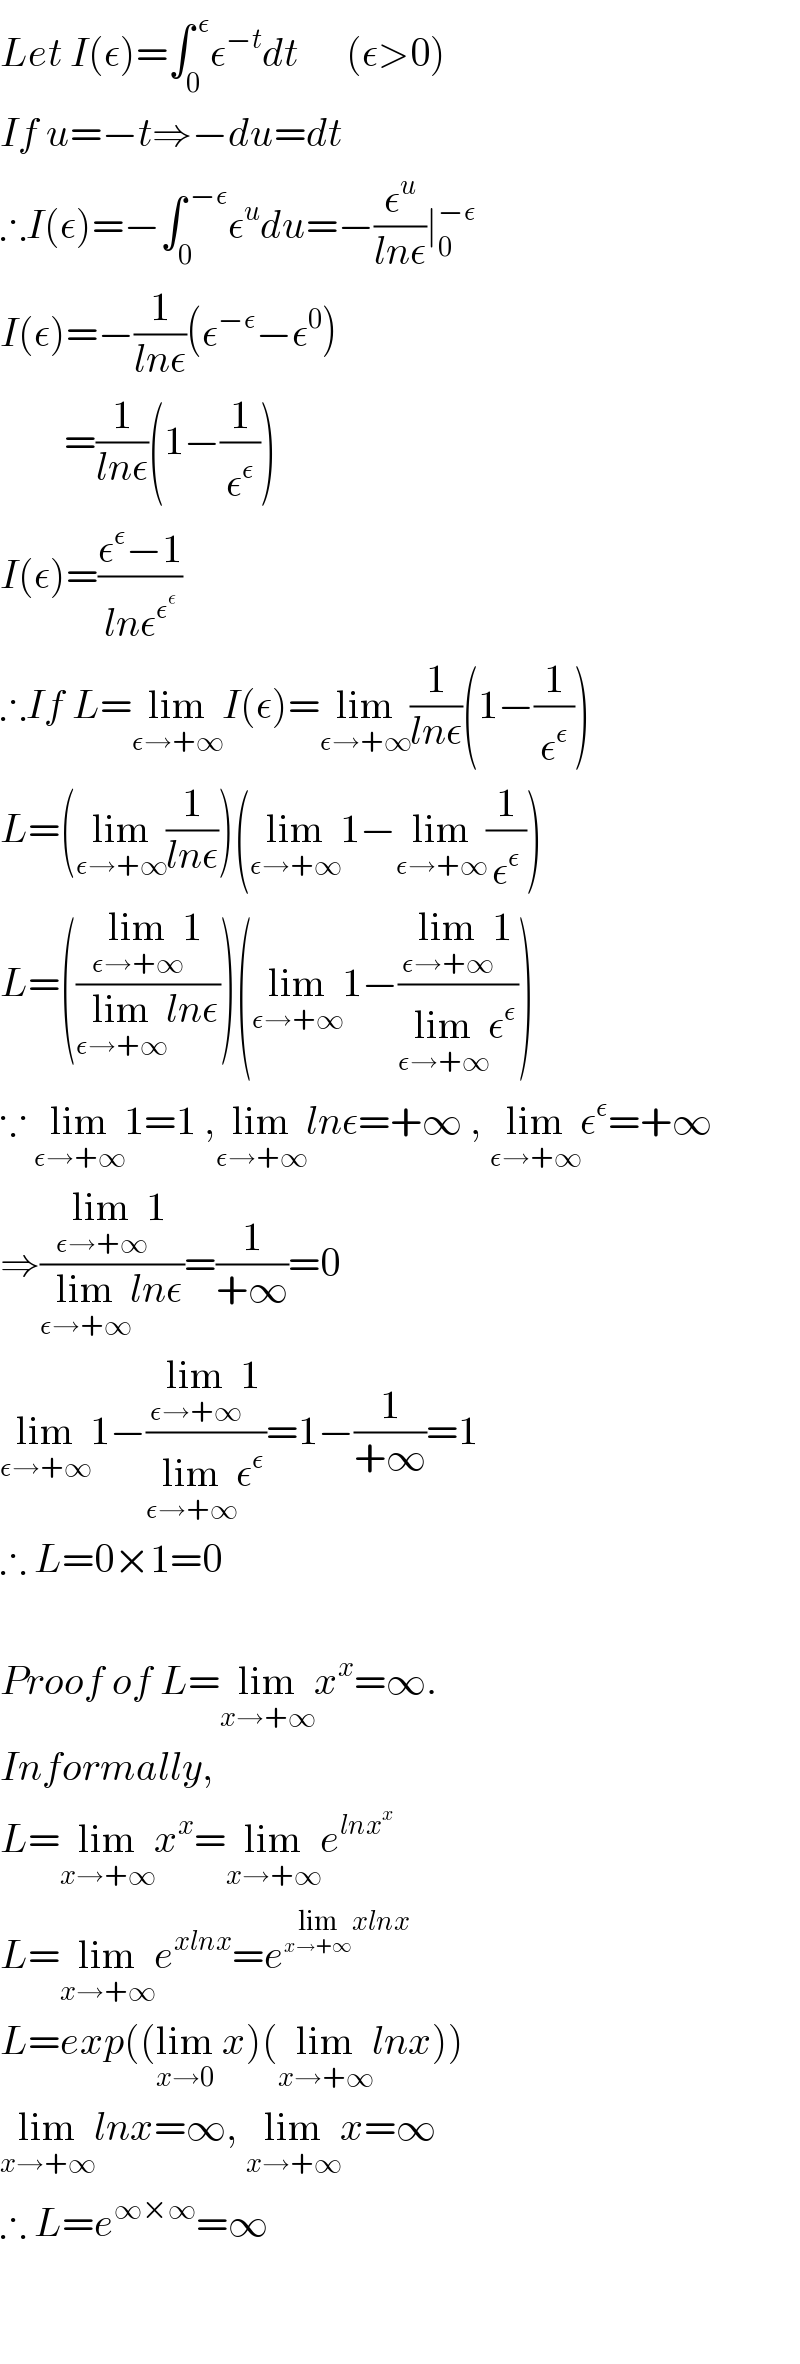 Let I(ε)=∫_0 ^( ε) ε^(−t) dt      (ε>0)  If u=−t⇒−du=dt  ∴I(ε)=−∫_0 ^( −ε) ε^u du=−(ε^u /(lnε))∣_0 ^(−ε)   I(ε)=−(1/(lnε))(ε^(−ε) −ε^0 )          =(1/(lnε))(1−(1/ε^ε ))  I(ε)=((ε^ε −1)/(lnε^ε^ε  ))  ∴If L=lim_(ε→+∞) I(ε)=lim_(ε→+∞) (1/(lnε))(1−(1/ε^ε ))  L=(lim_(ε→+∞) (1/(lnε)))(lim_(ε→+∞) 1−lim_(ε→+∞) (1/ε^ε ))  L=(((lim_(ε→+∞) 1)/(lim_(ε→+∞) lnε)))(lim_(ε→+∞) 1−((lim_(ε→+∞) 1)/(lim_(ε→+∞) ε^ε )))  ∵ lim_(ε→+∞) 1=1 ,lim_(ε→+∞) lnε=+∞ , lim_(ε→+∞) ε^ε =+∞    ⇒((lim_(ε→+∞) 1)/(lim_(ε→+∞) lnε))=(1/(+∞))=0  lim_(ε→+∞) 1−((lim_(ε→+∞) 1)/(lim_(ε→+∞) ε^ε ))=1−(1/(+∞))=1  ∴ L=0×1=0      Proof of L=lim_(x→+∞) x^x =∞.   Informally,  L=lim_(x→+∞) x^x =lim_(x→+∞) e^(lnx^x )   L=lim_(x→+∞) e^(xlnx) =e^(lim_(x→+∞) xlnx)   L=exp((lim_(x→0)  x)(lim_(x→+∞) lnx))  lim_(x→+∞) lnx=∞, lim_(x→+∞) x=∞  ∴ L=e^(∞×∞) =∞      